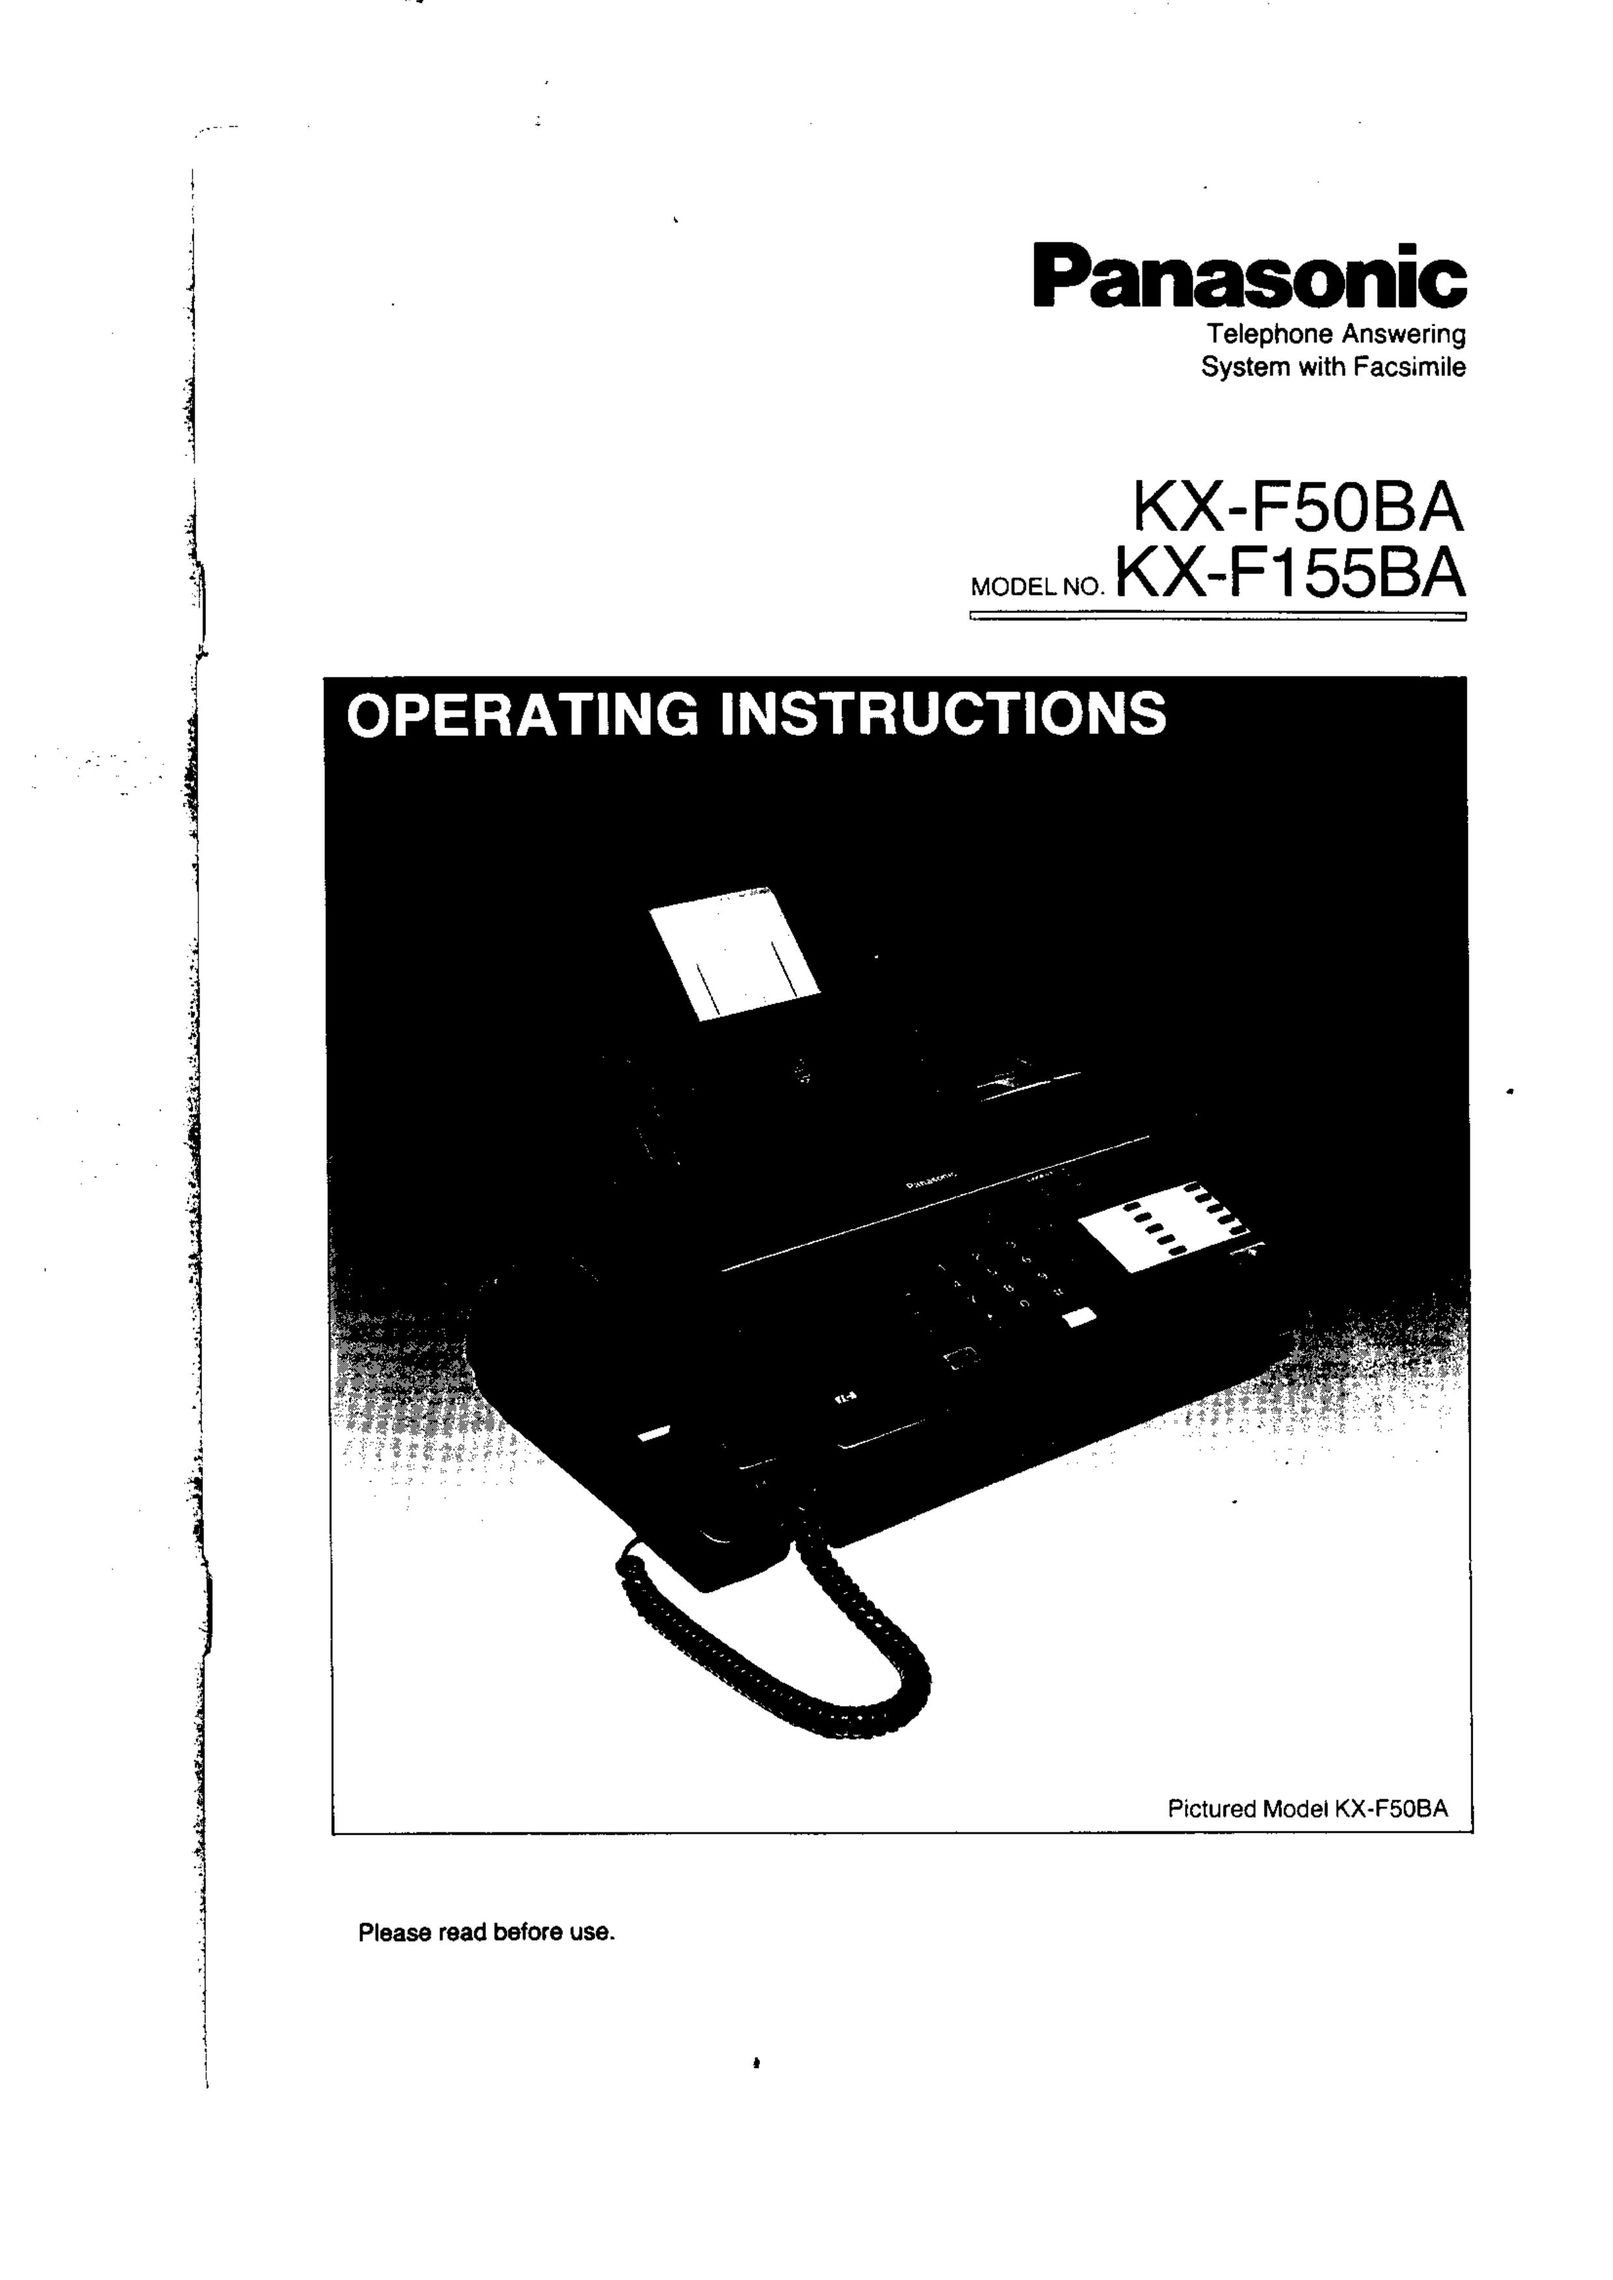 Panasonic KX-F155BA Answering Machine User Manual